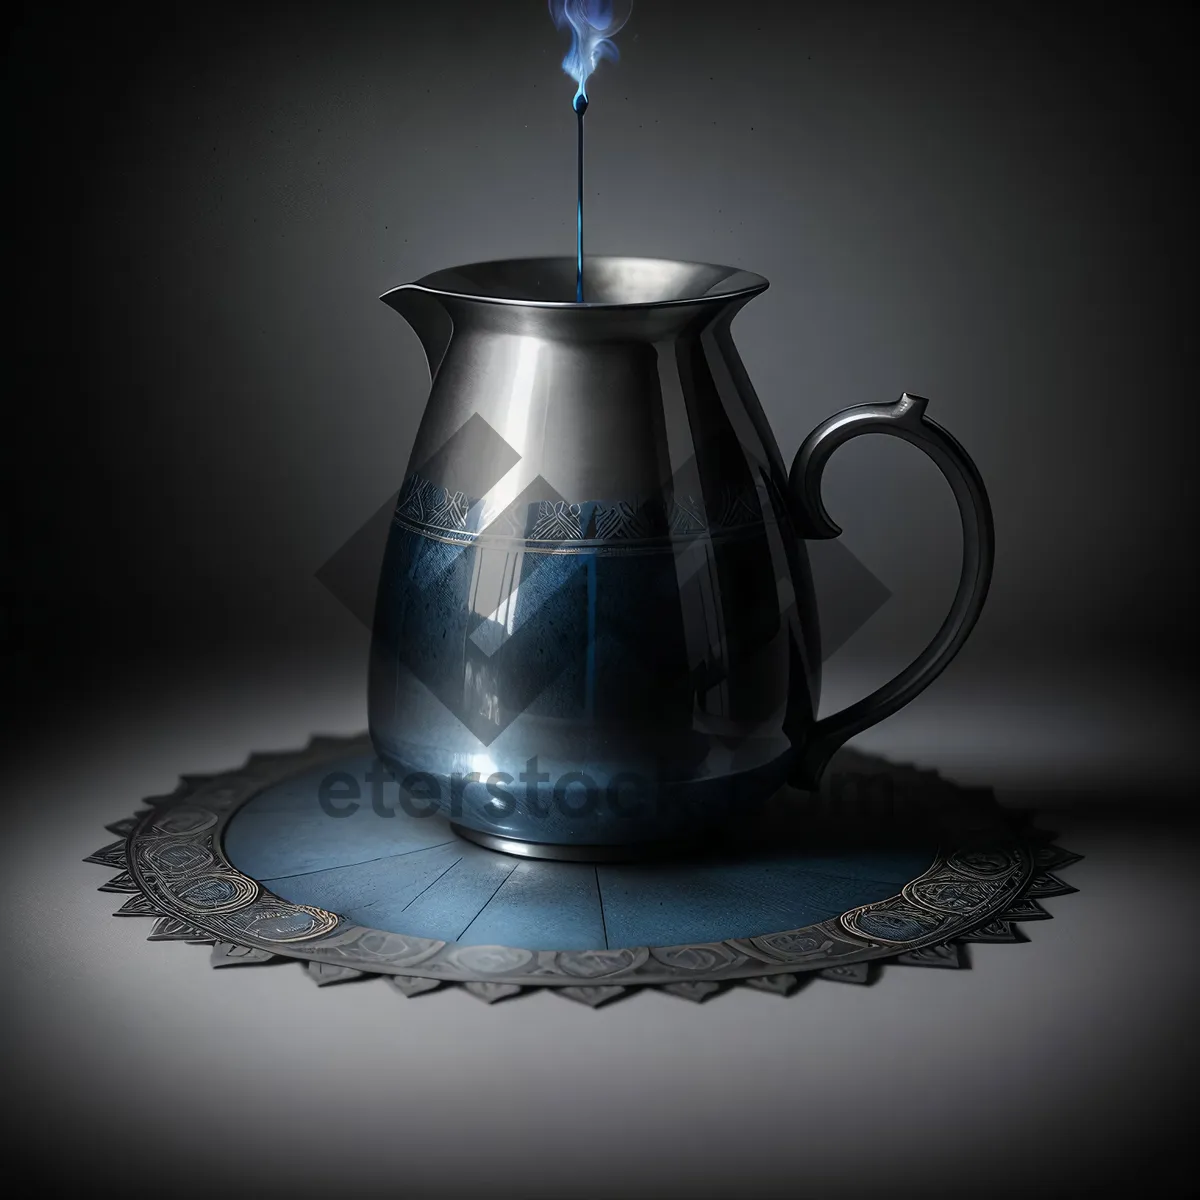 Picture of Hot Tea in Ceramic Cup